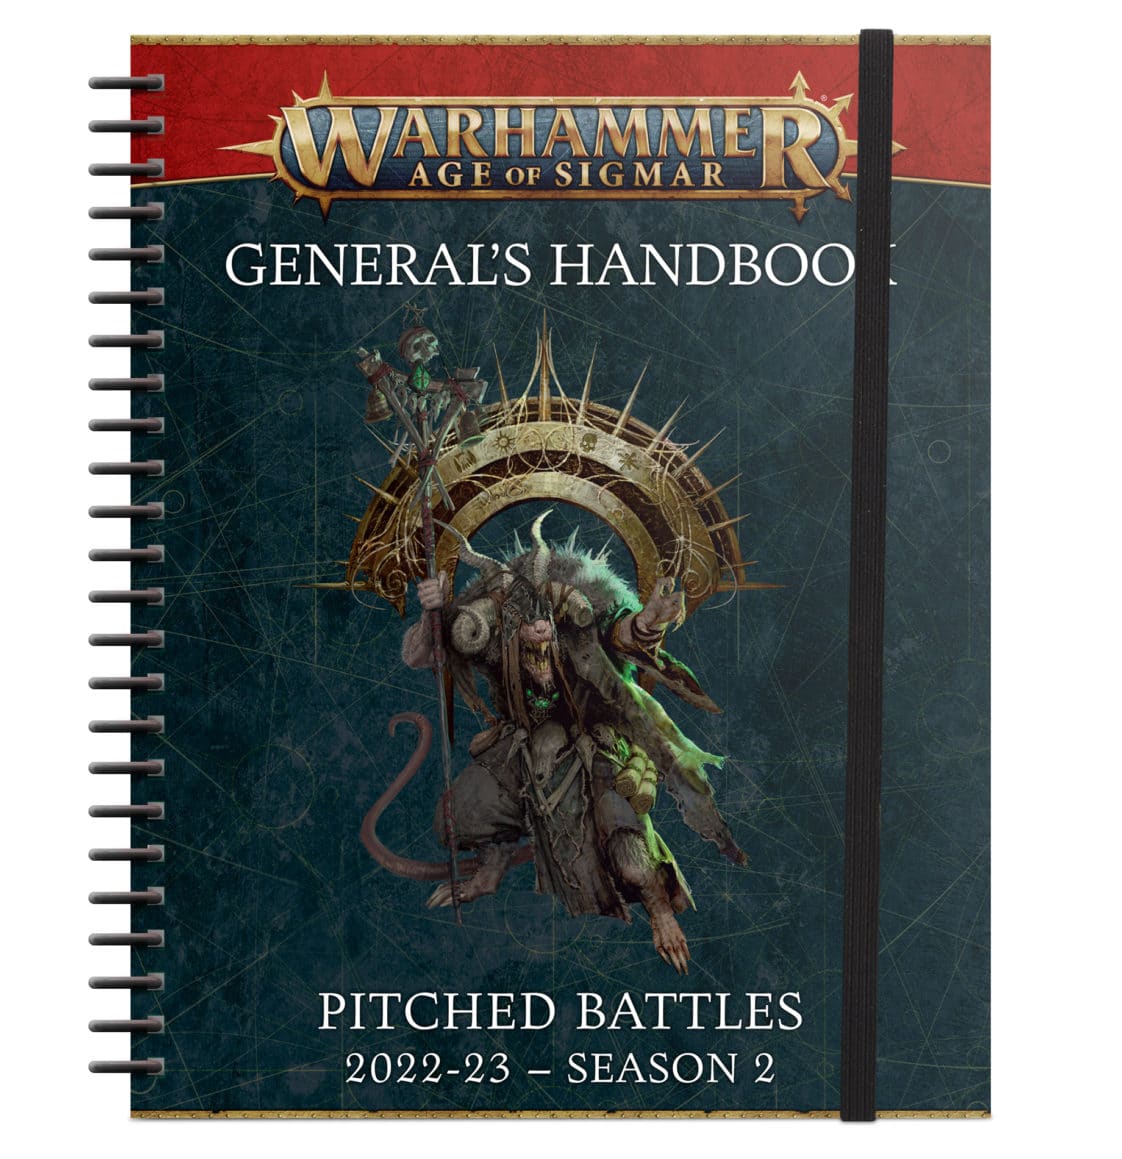 General’s Handbook Pitched Battles 2022-23 Season 2 (English)